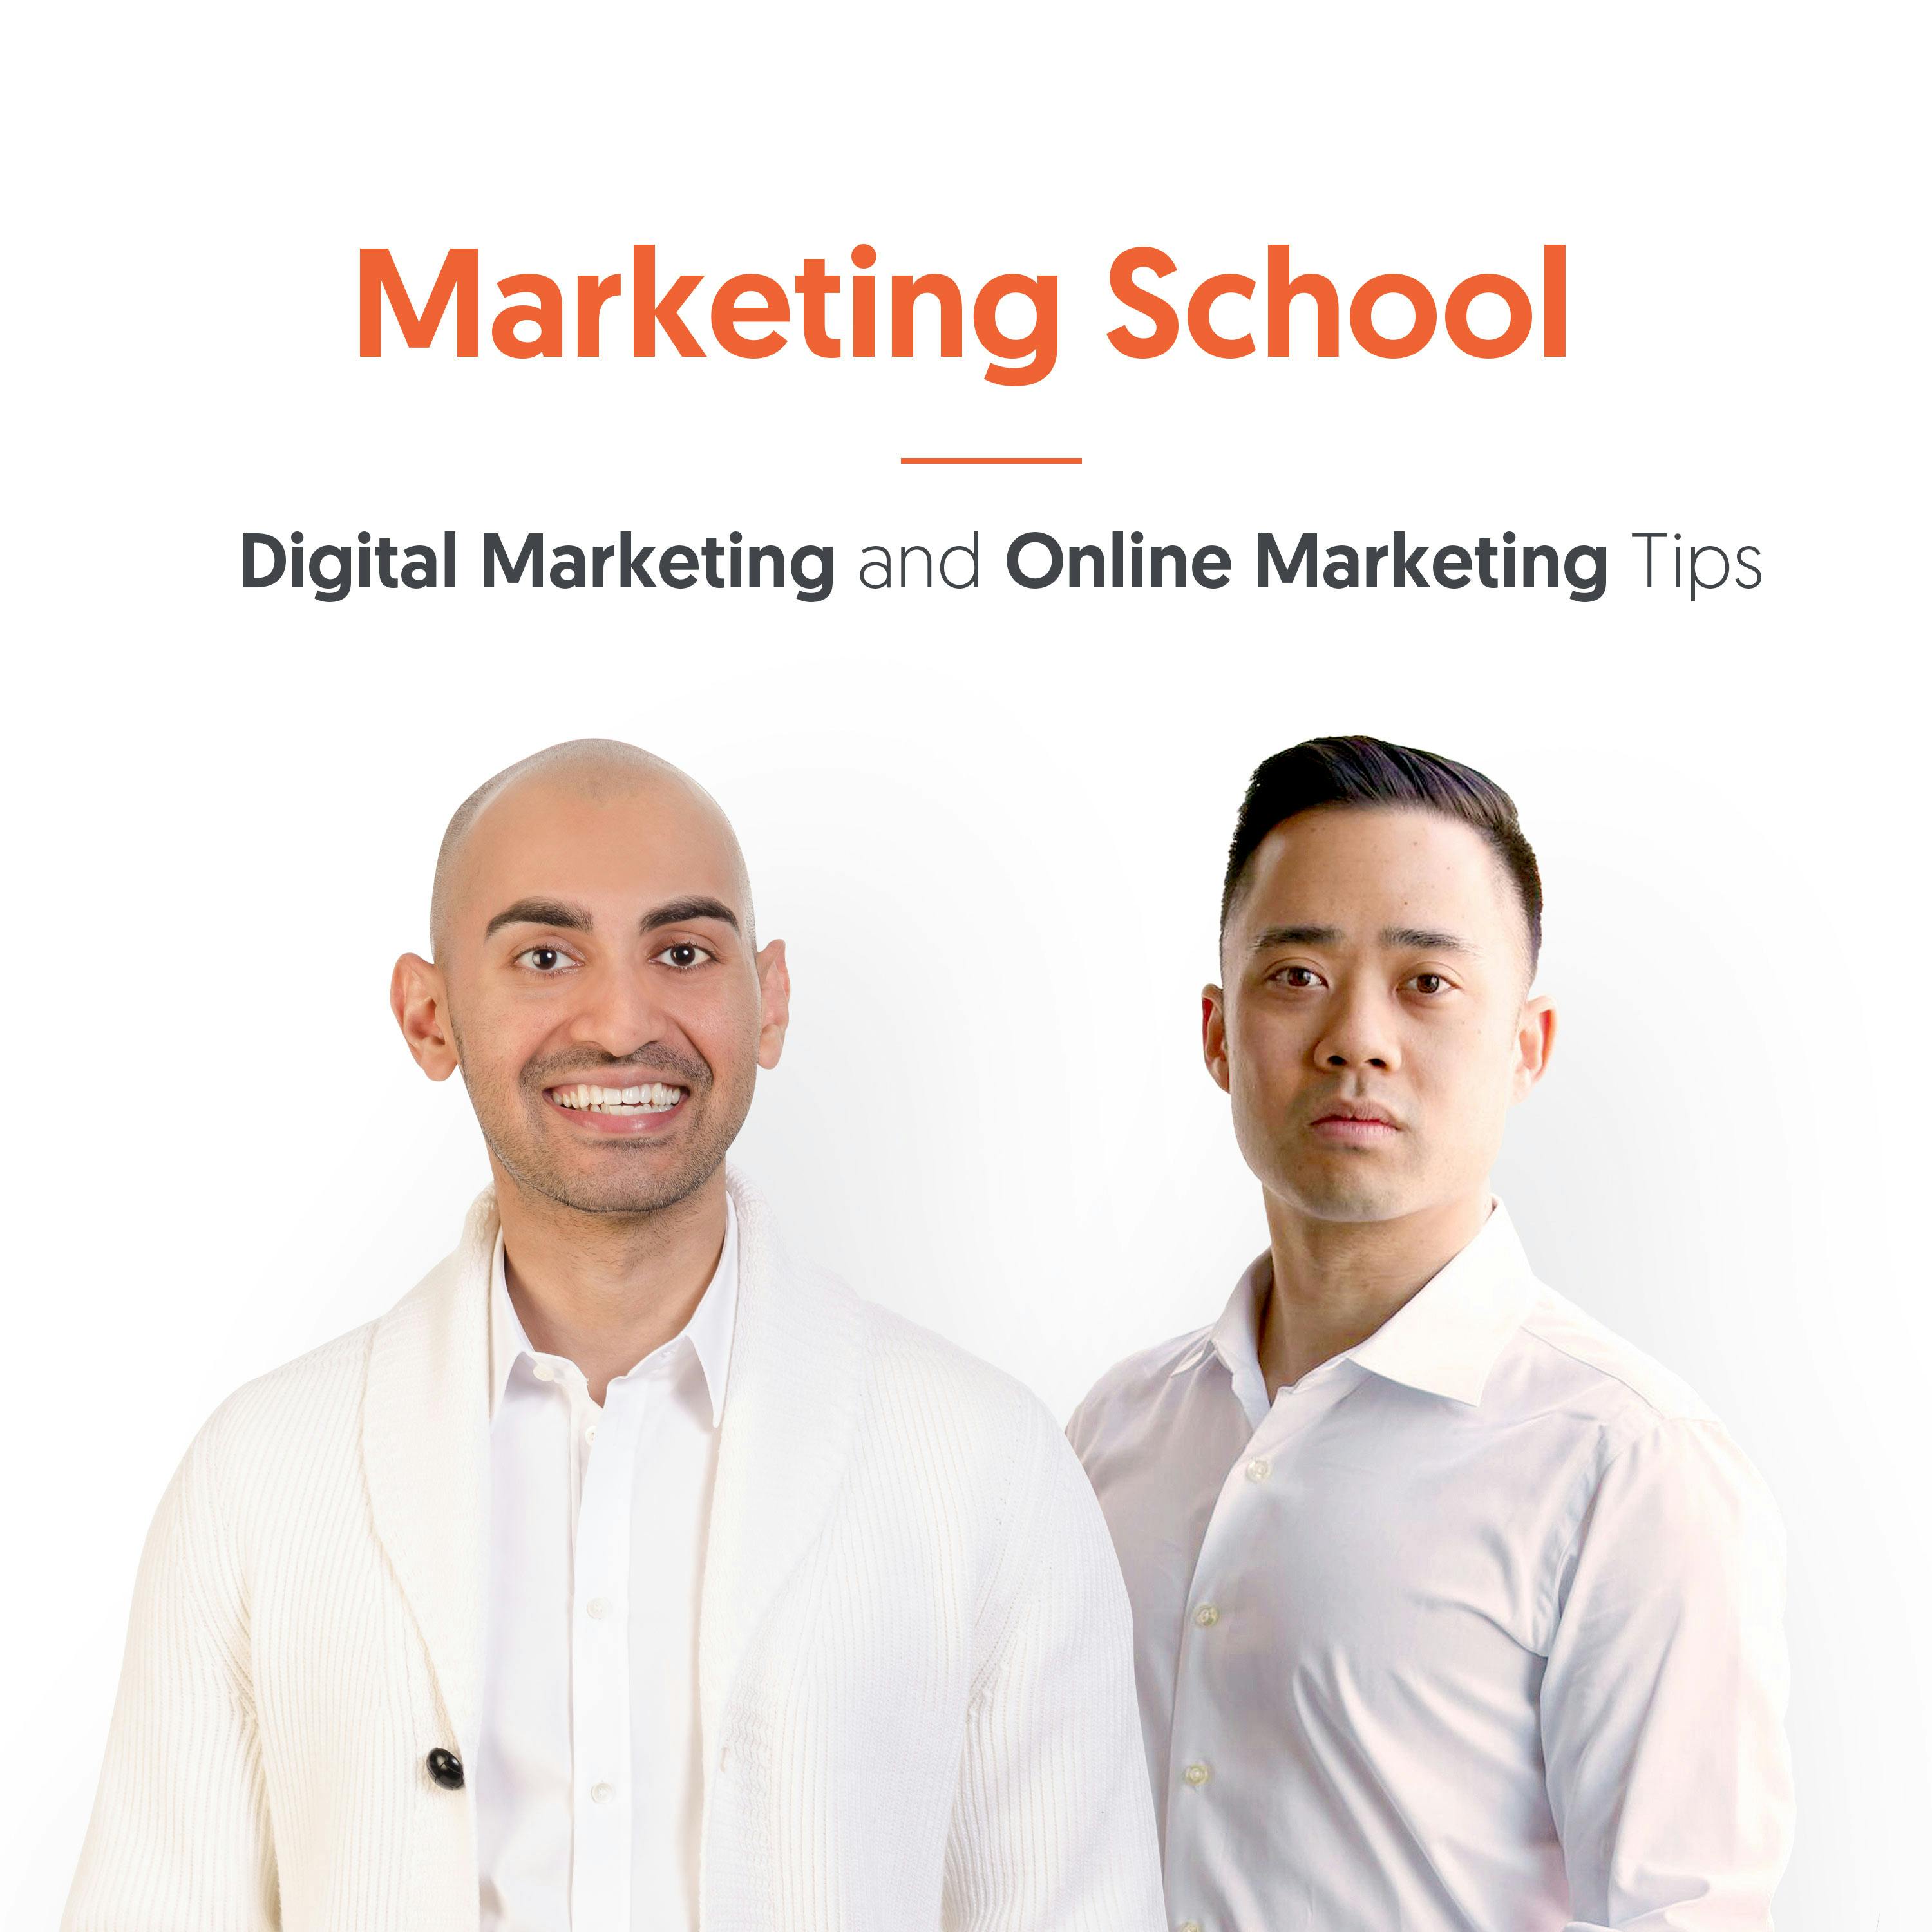 Marketing School - Digital Marketing and Online Marketing Tips:Eric Siu & Neil Patel